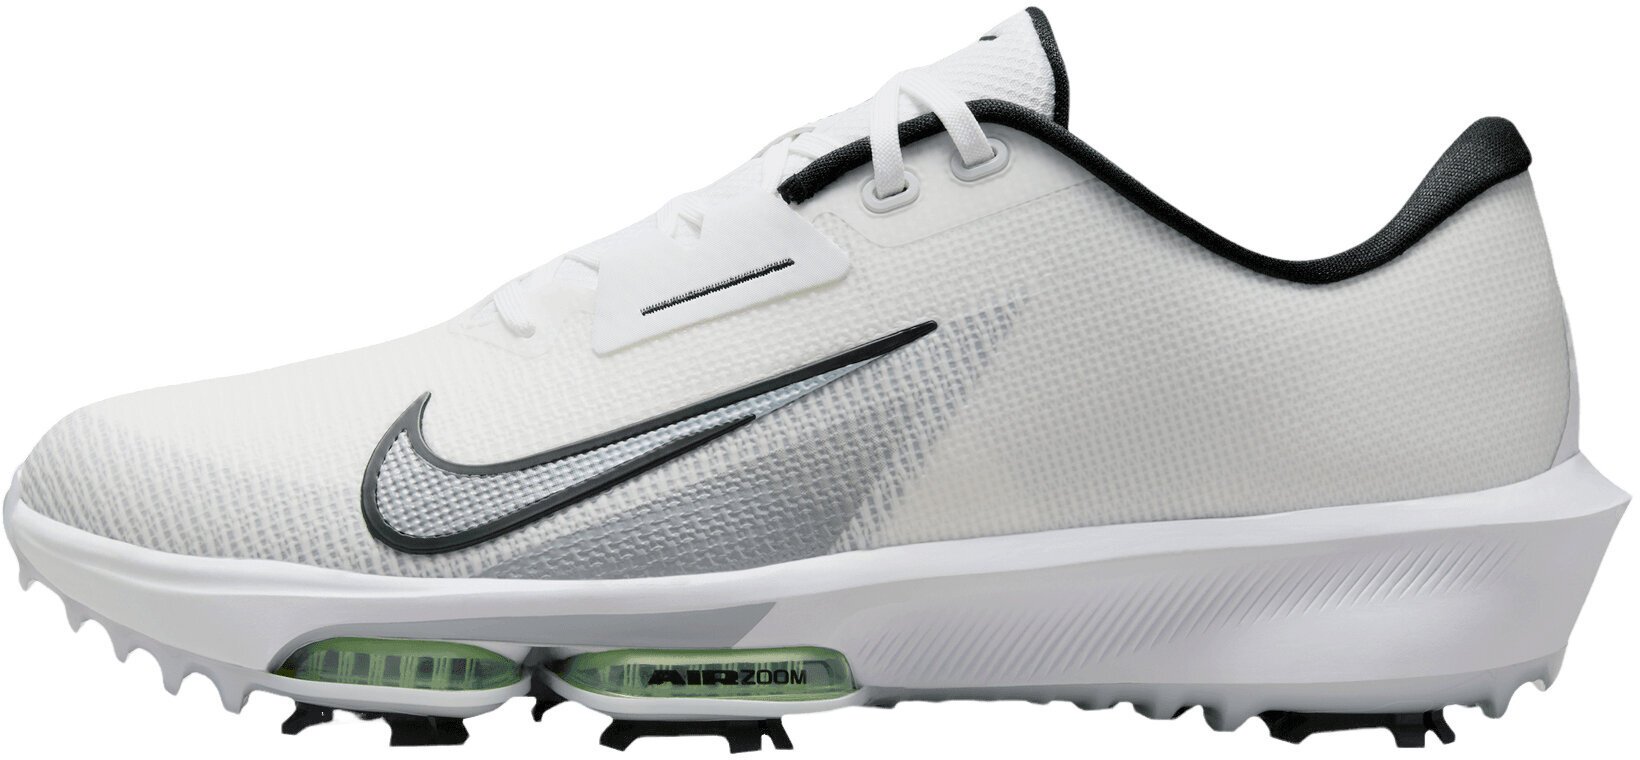 Nike Air Zoom Infinity Tour Next 2 Unisex Golf Shoes White/Black/Vapor Green/Pure Platinum 45,5 White unisex